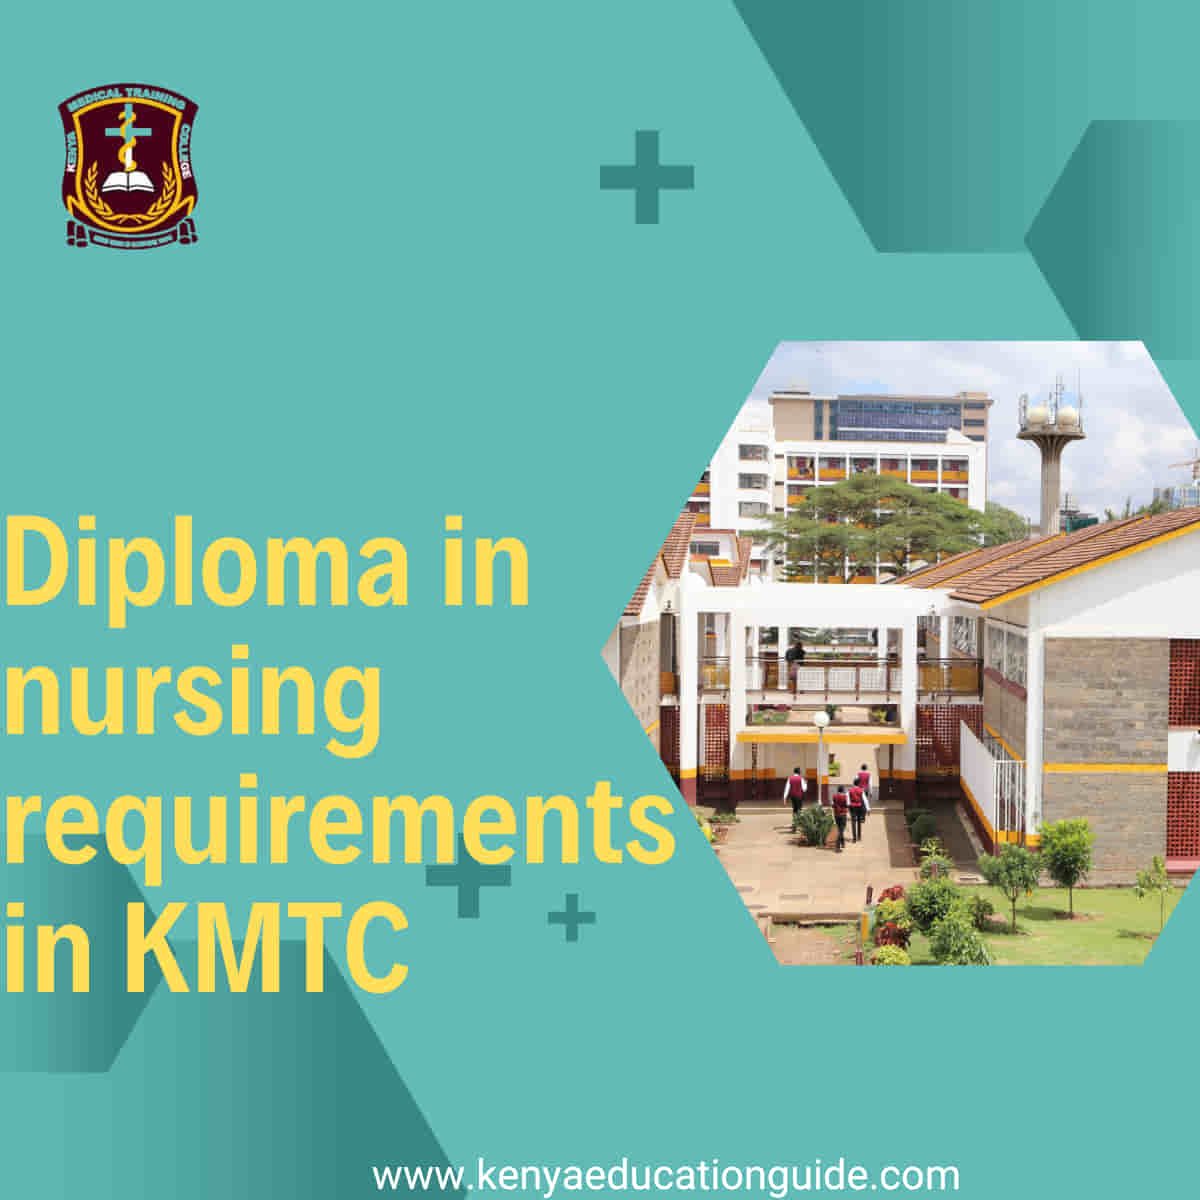 Diploma in nursing requirements in KMTC